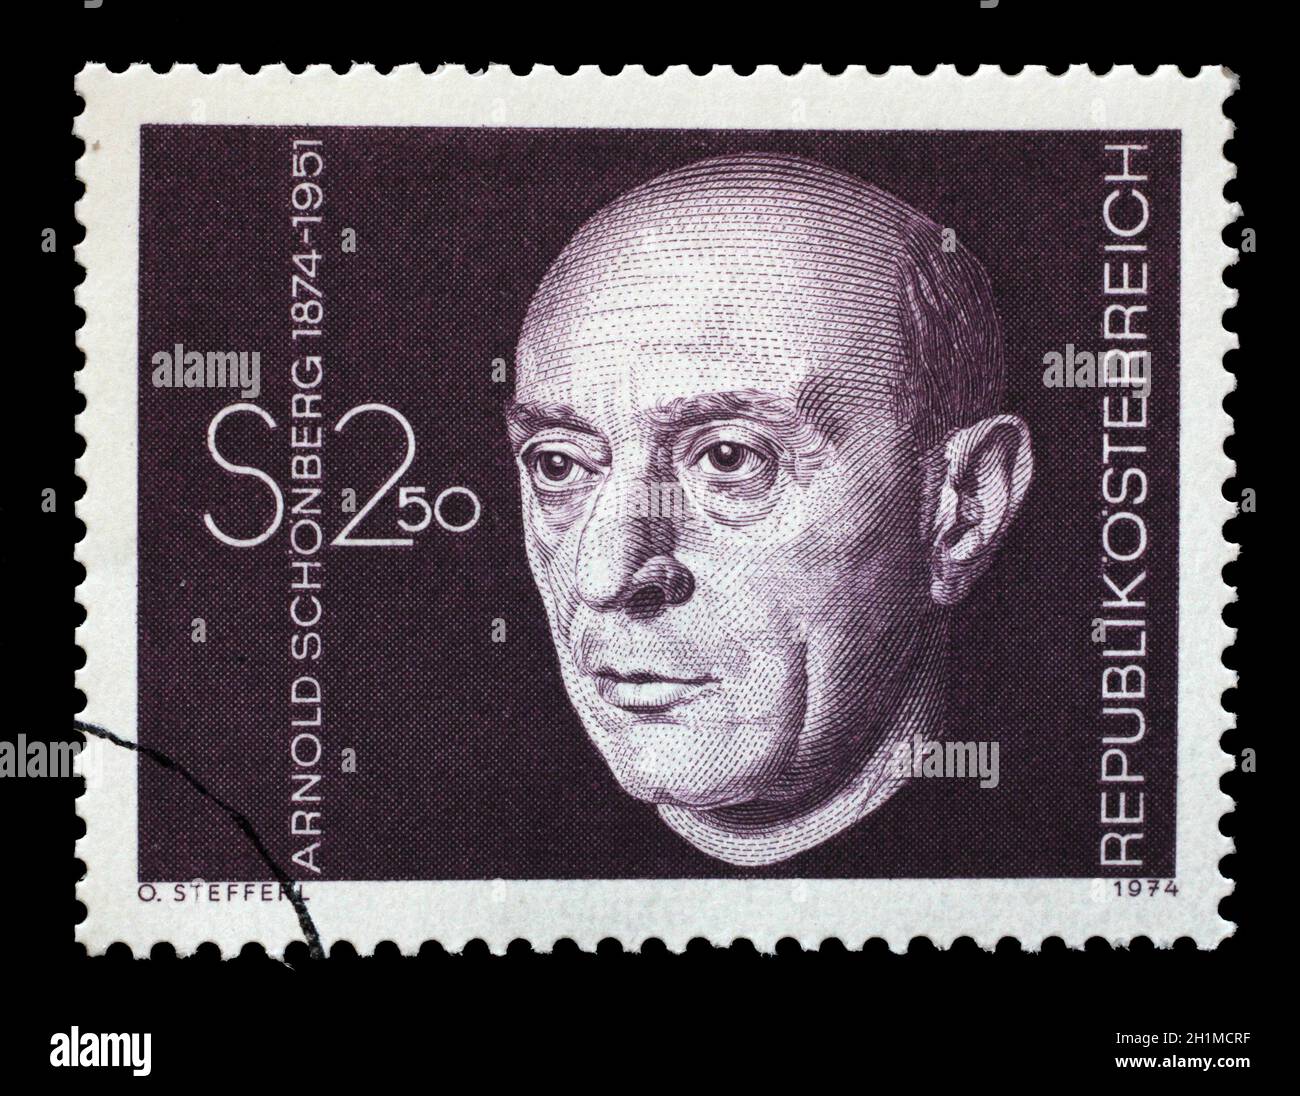 Stamp printed in Austria shows Arnold Schonberg, composer, circa 1974 Stock Photo